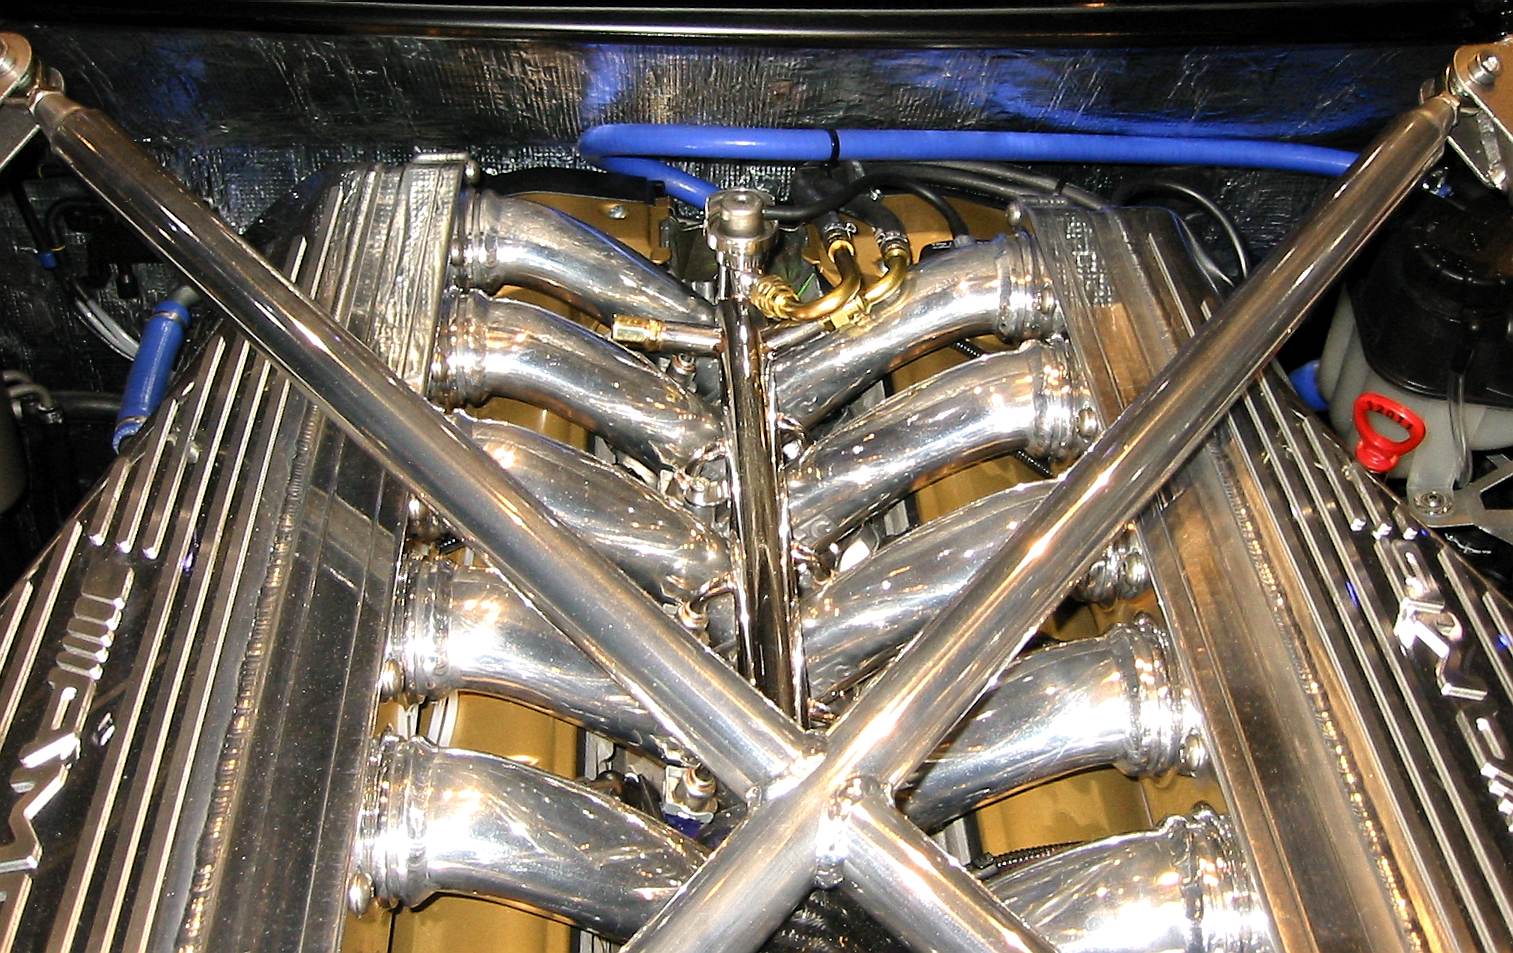 Zonda Engine